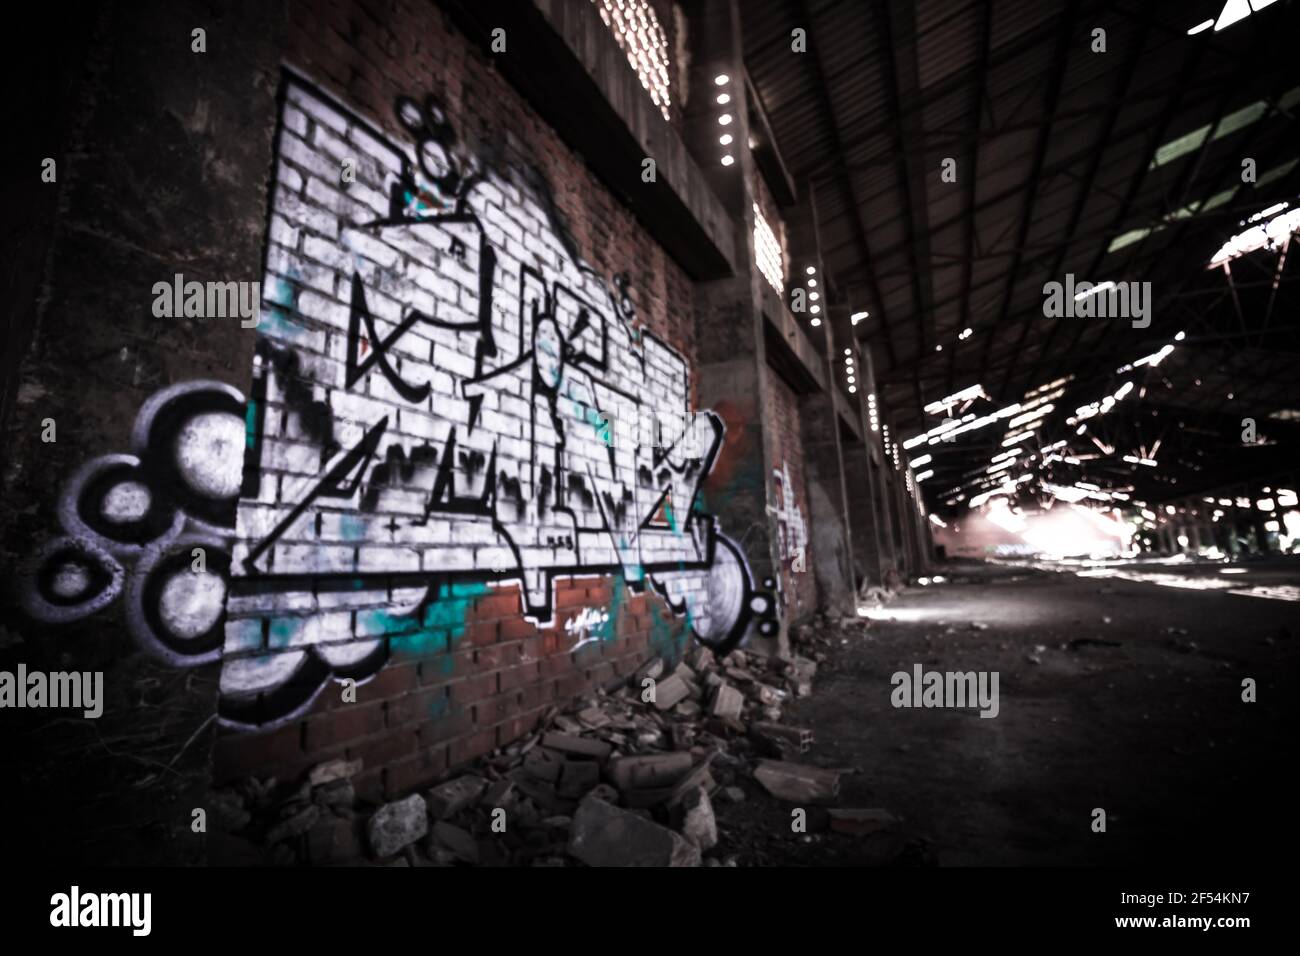 Graffiti street art Stock Photo